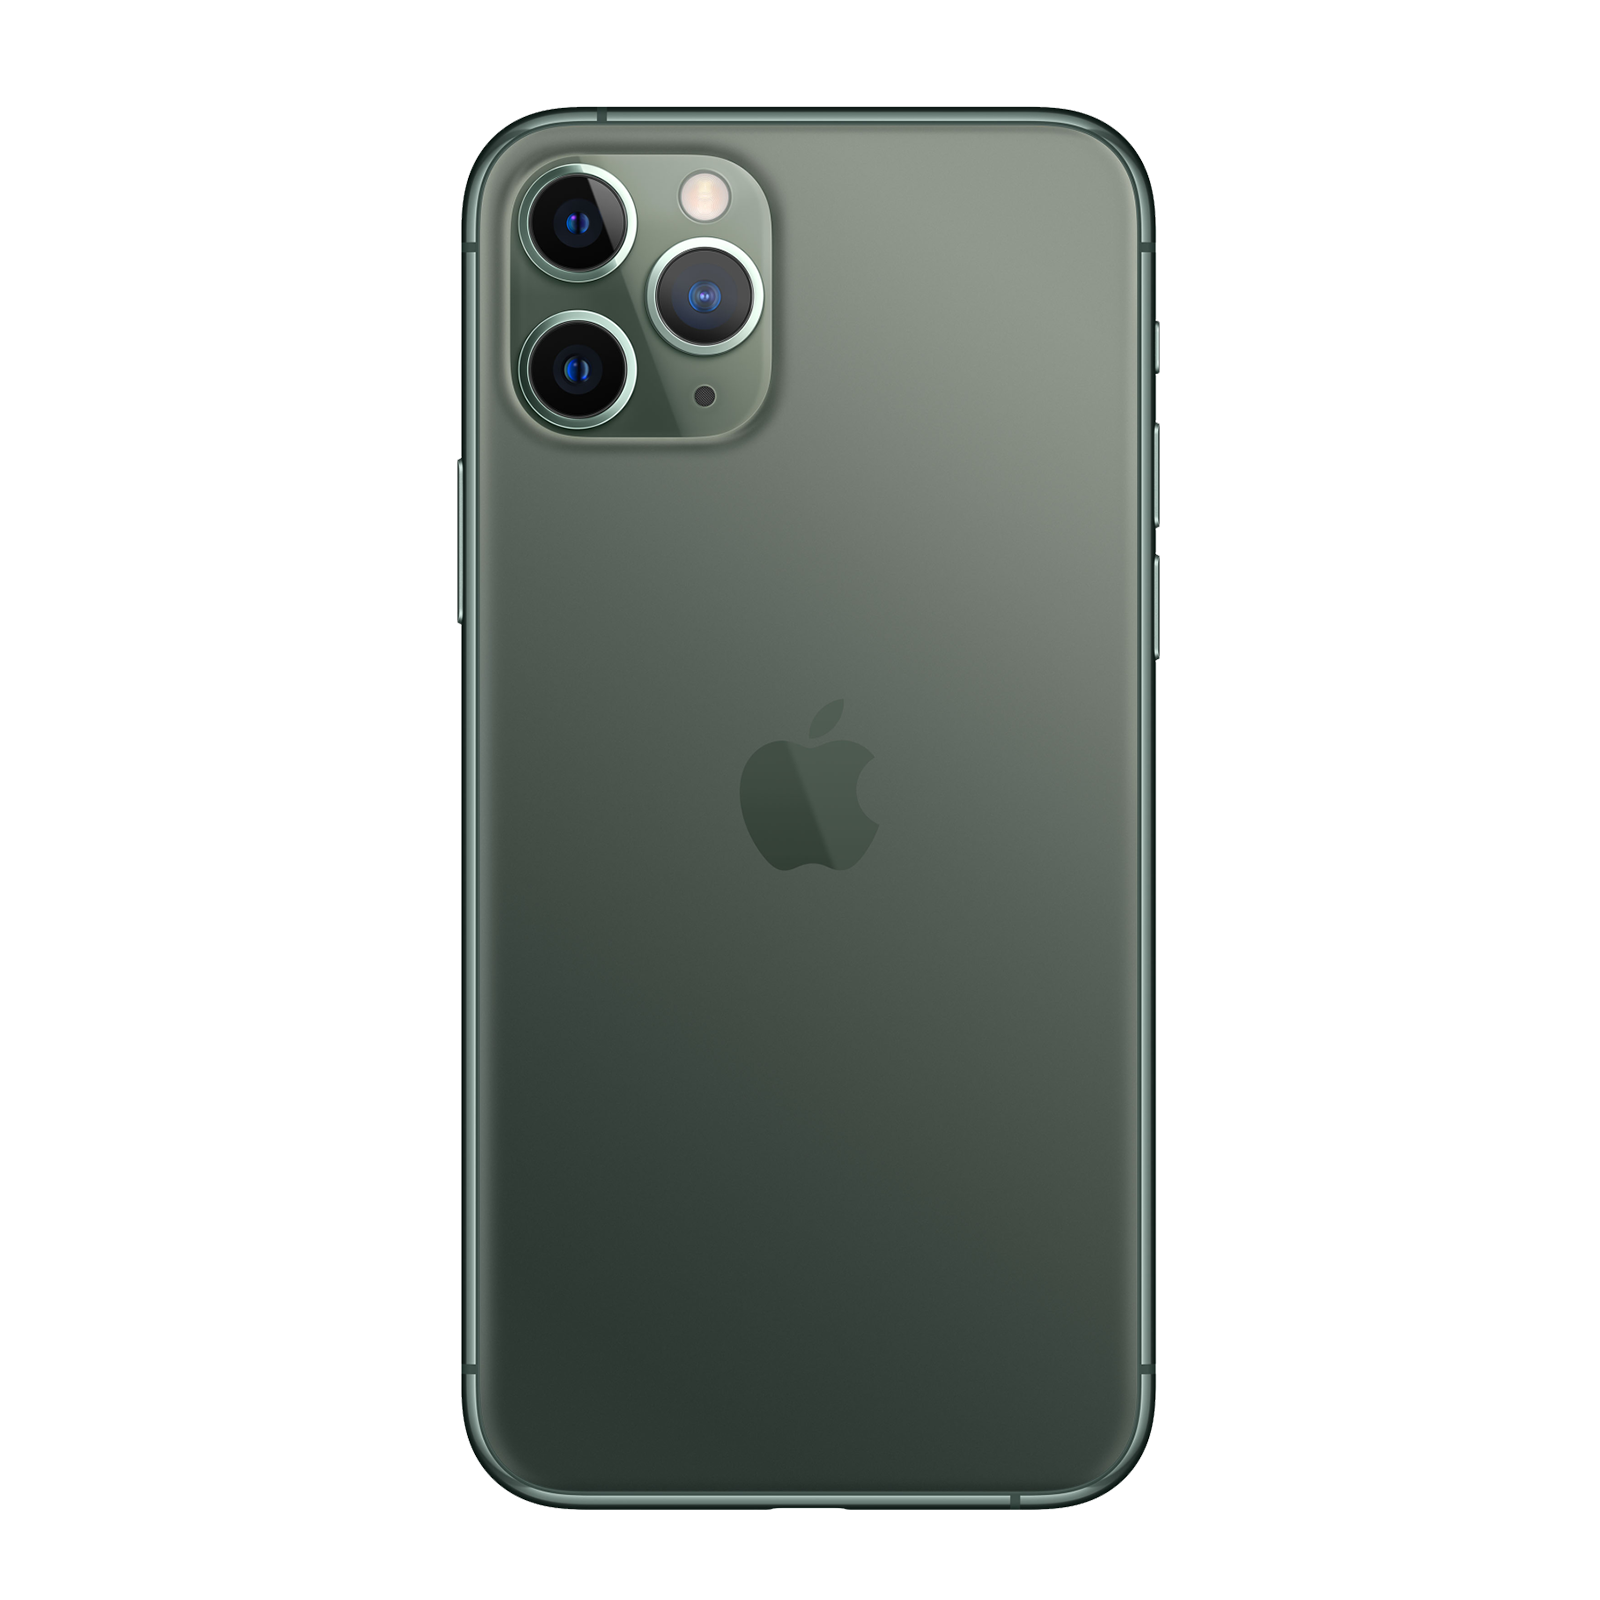 Apple iPhone 11 Pro Max 256GB Midnight Green Pristine - Sprint